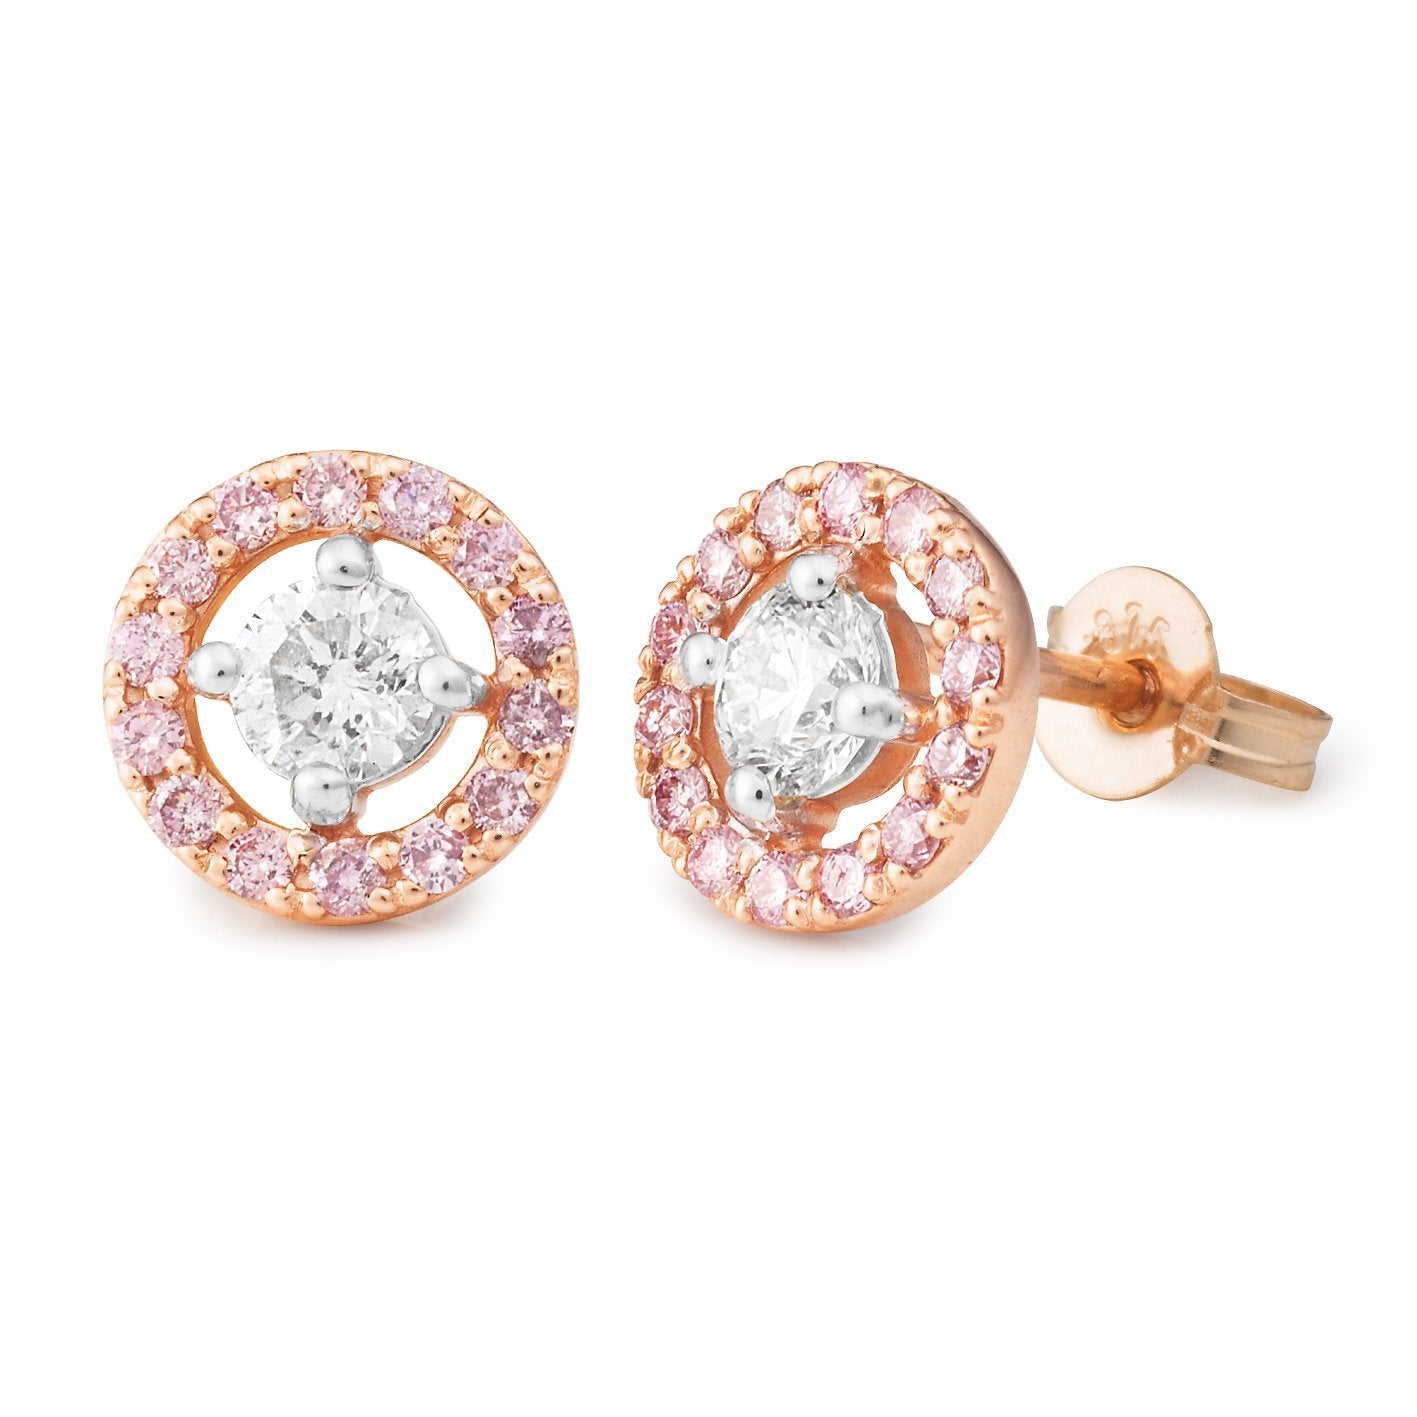 PINK CAVIAR 0.78ct Pink Diamond Earrings in 9ct Rose Gold